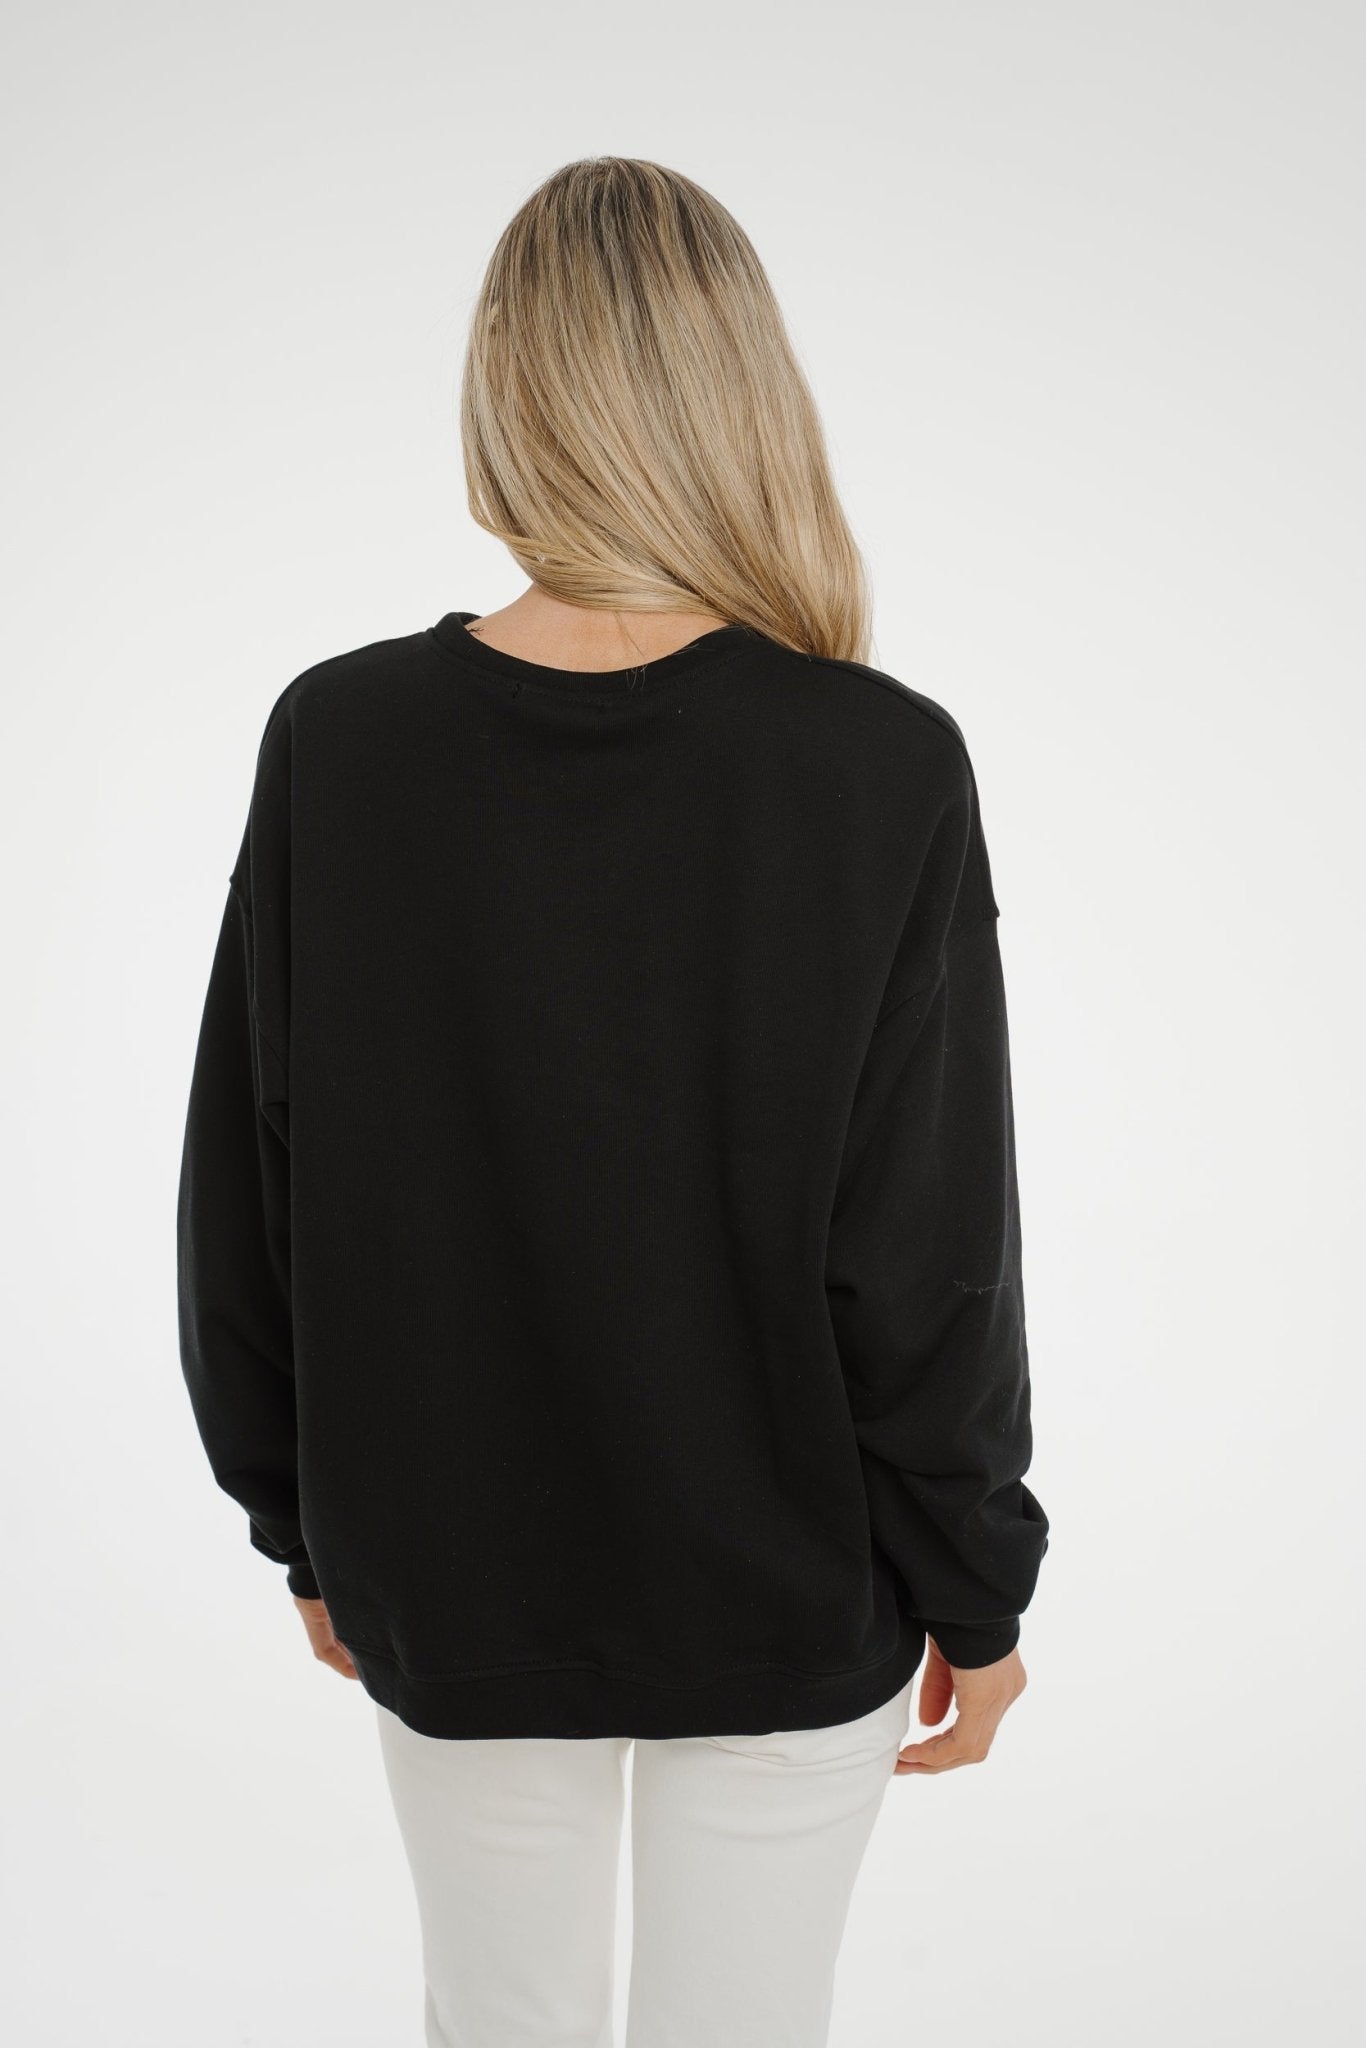 Melanie Print Front Sweatshirt In Black - The Walk in Wardrobe